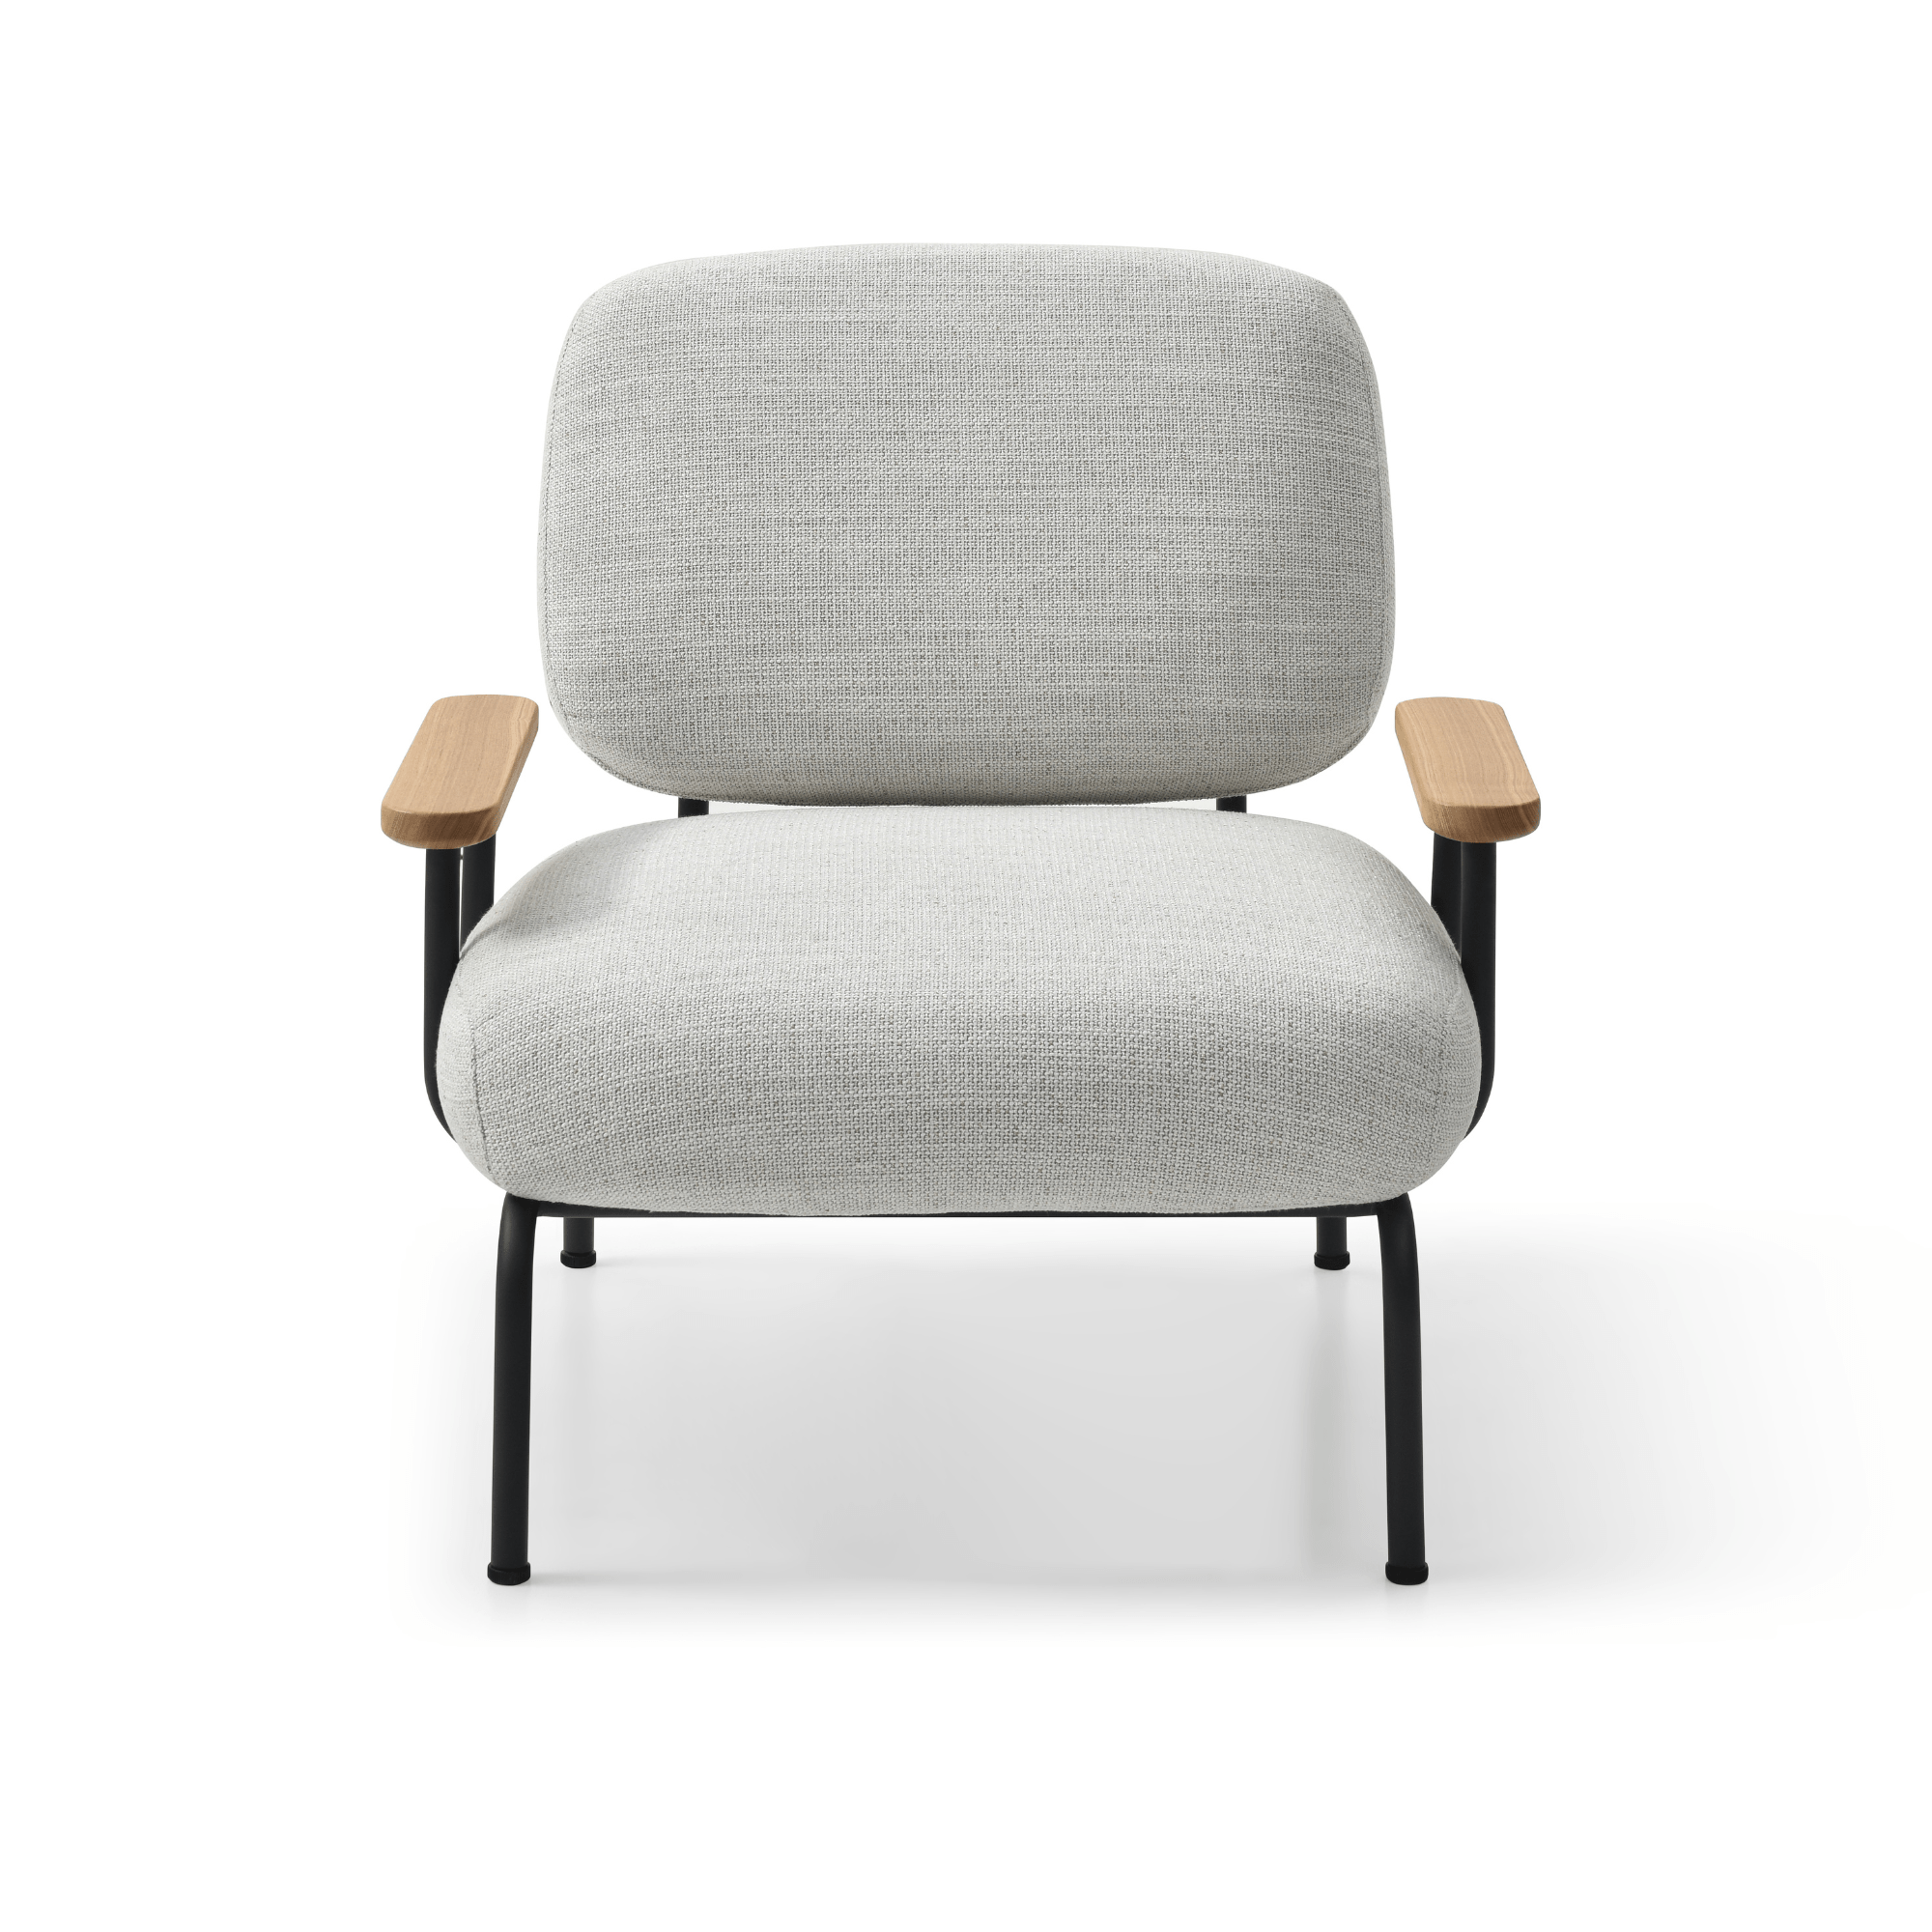 Seek & Ramble Accent Chair Mattia Occasional Upholstered Chair